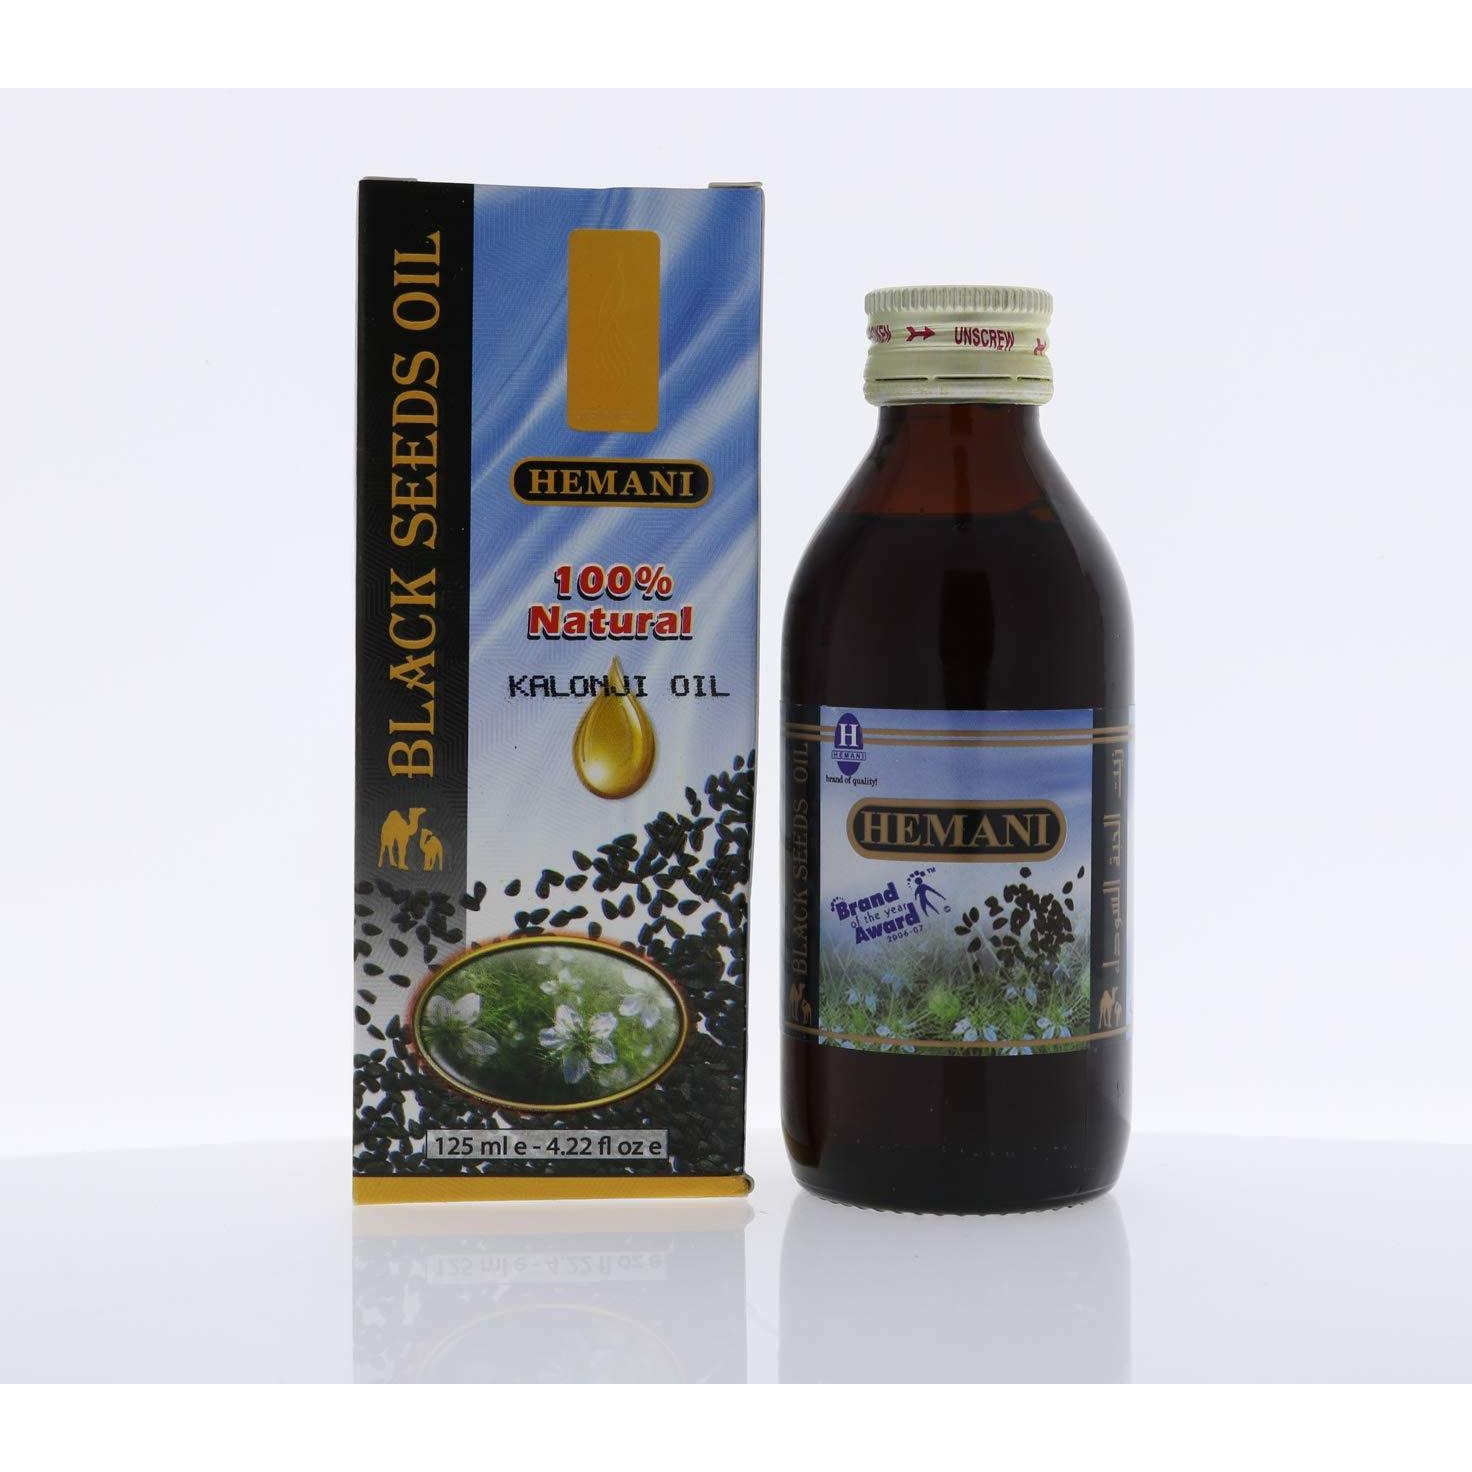 Black Seed Oil 125 ML - 4 FL OZ - First Cold Pressed - Alcohol Free - Solvent Free - IMMUNITY BOOSTER - Black Cumin Seed Oil from 100% HALAL Genuine Nigella Sativa